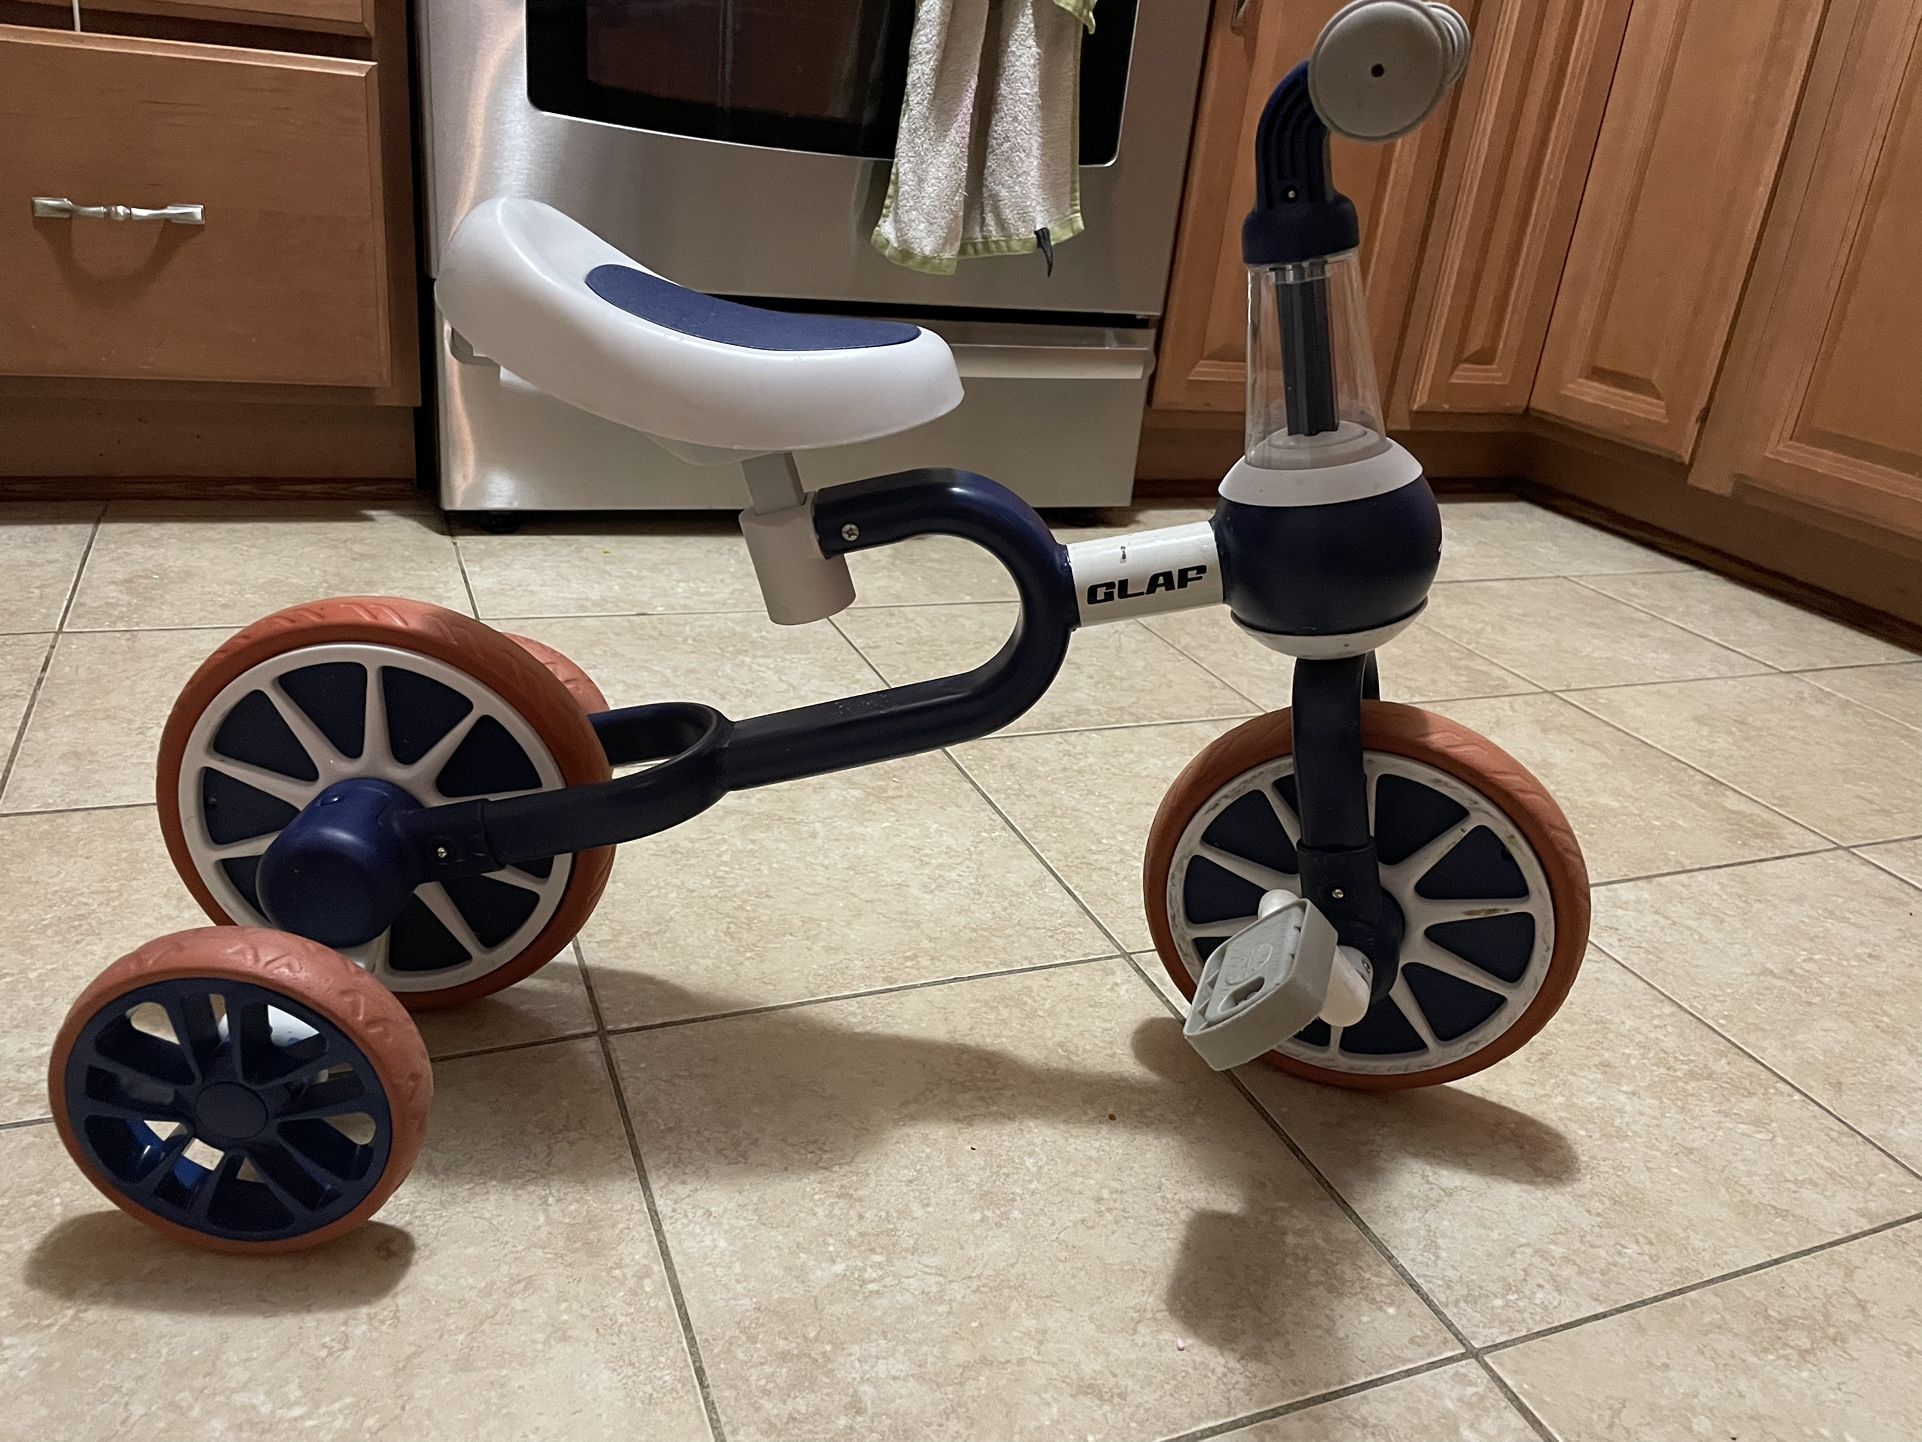 Glaf Toddler Bike